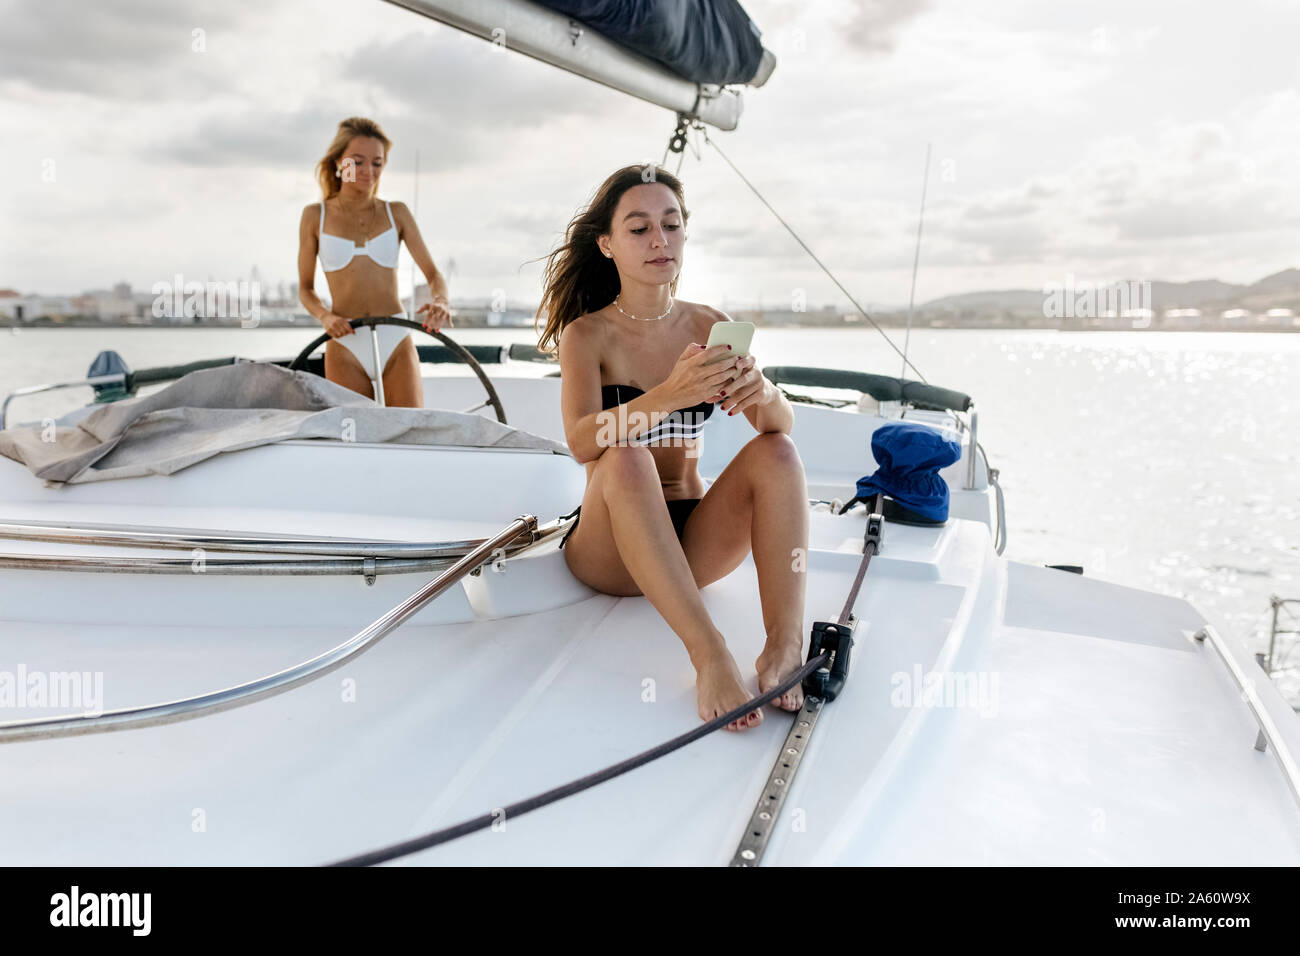 Two beautiful women enjoying a summer day on a sailboat Stock Photo